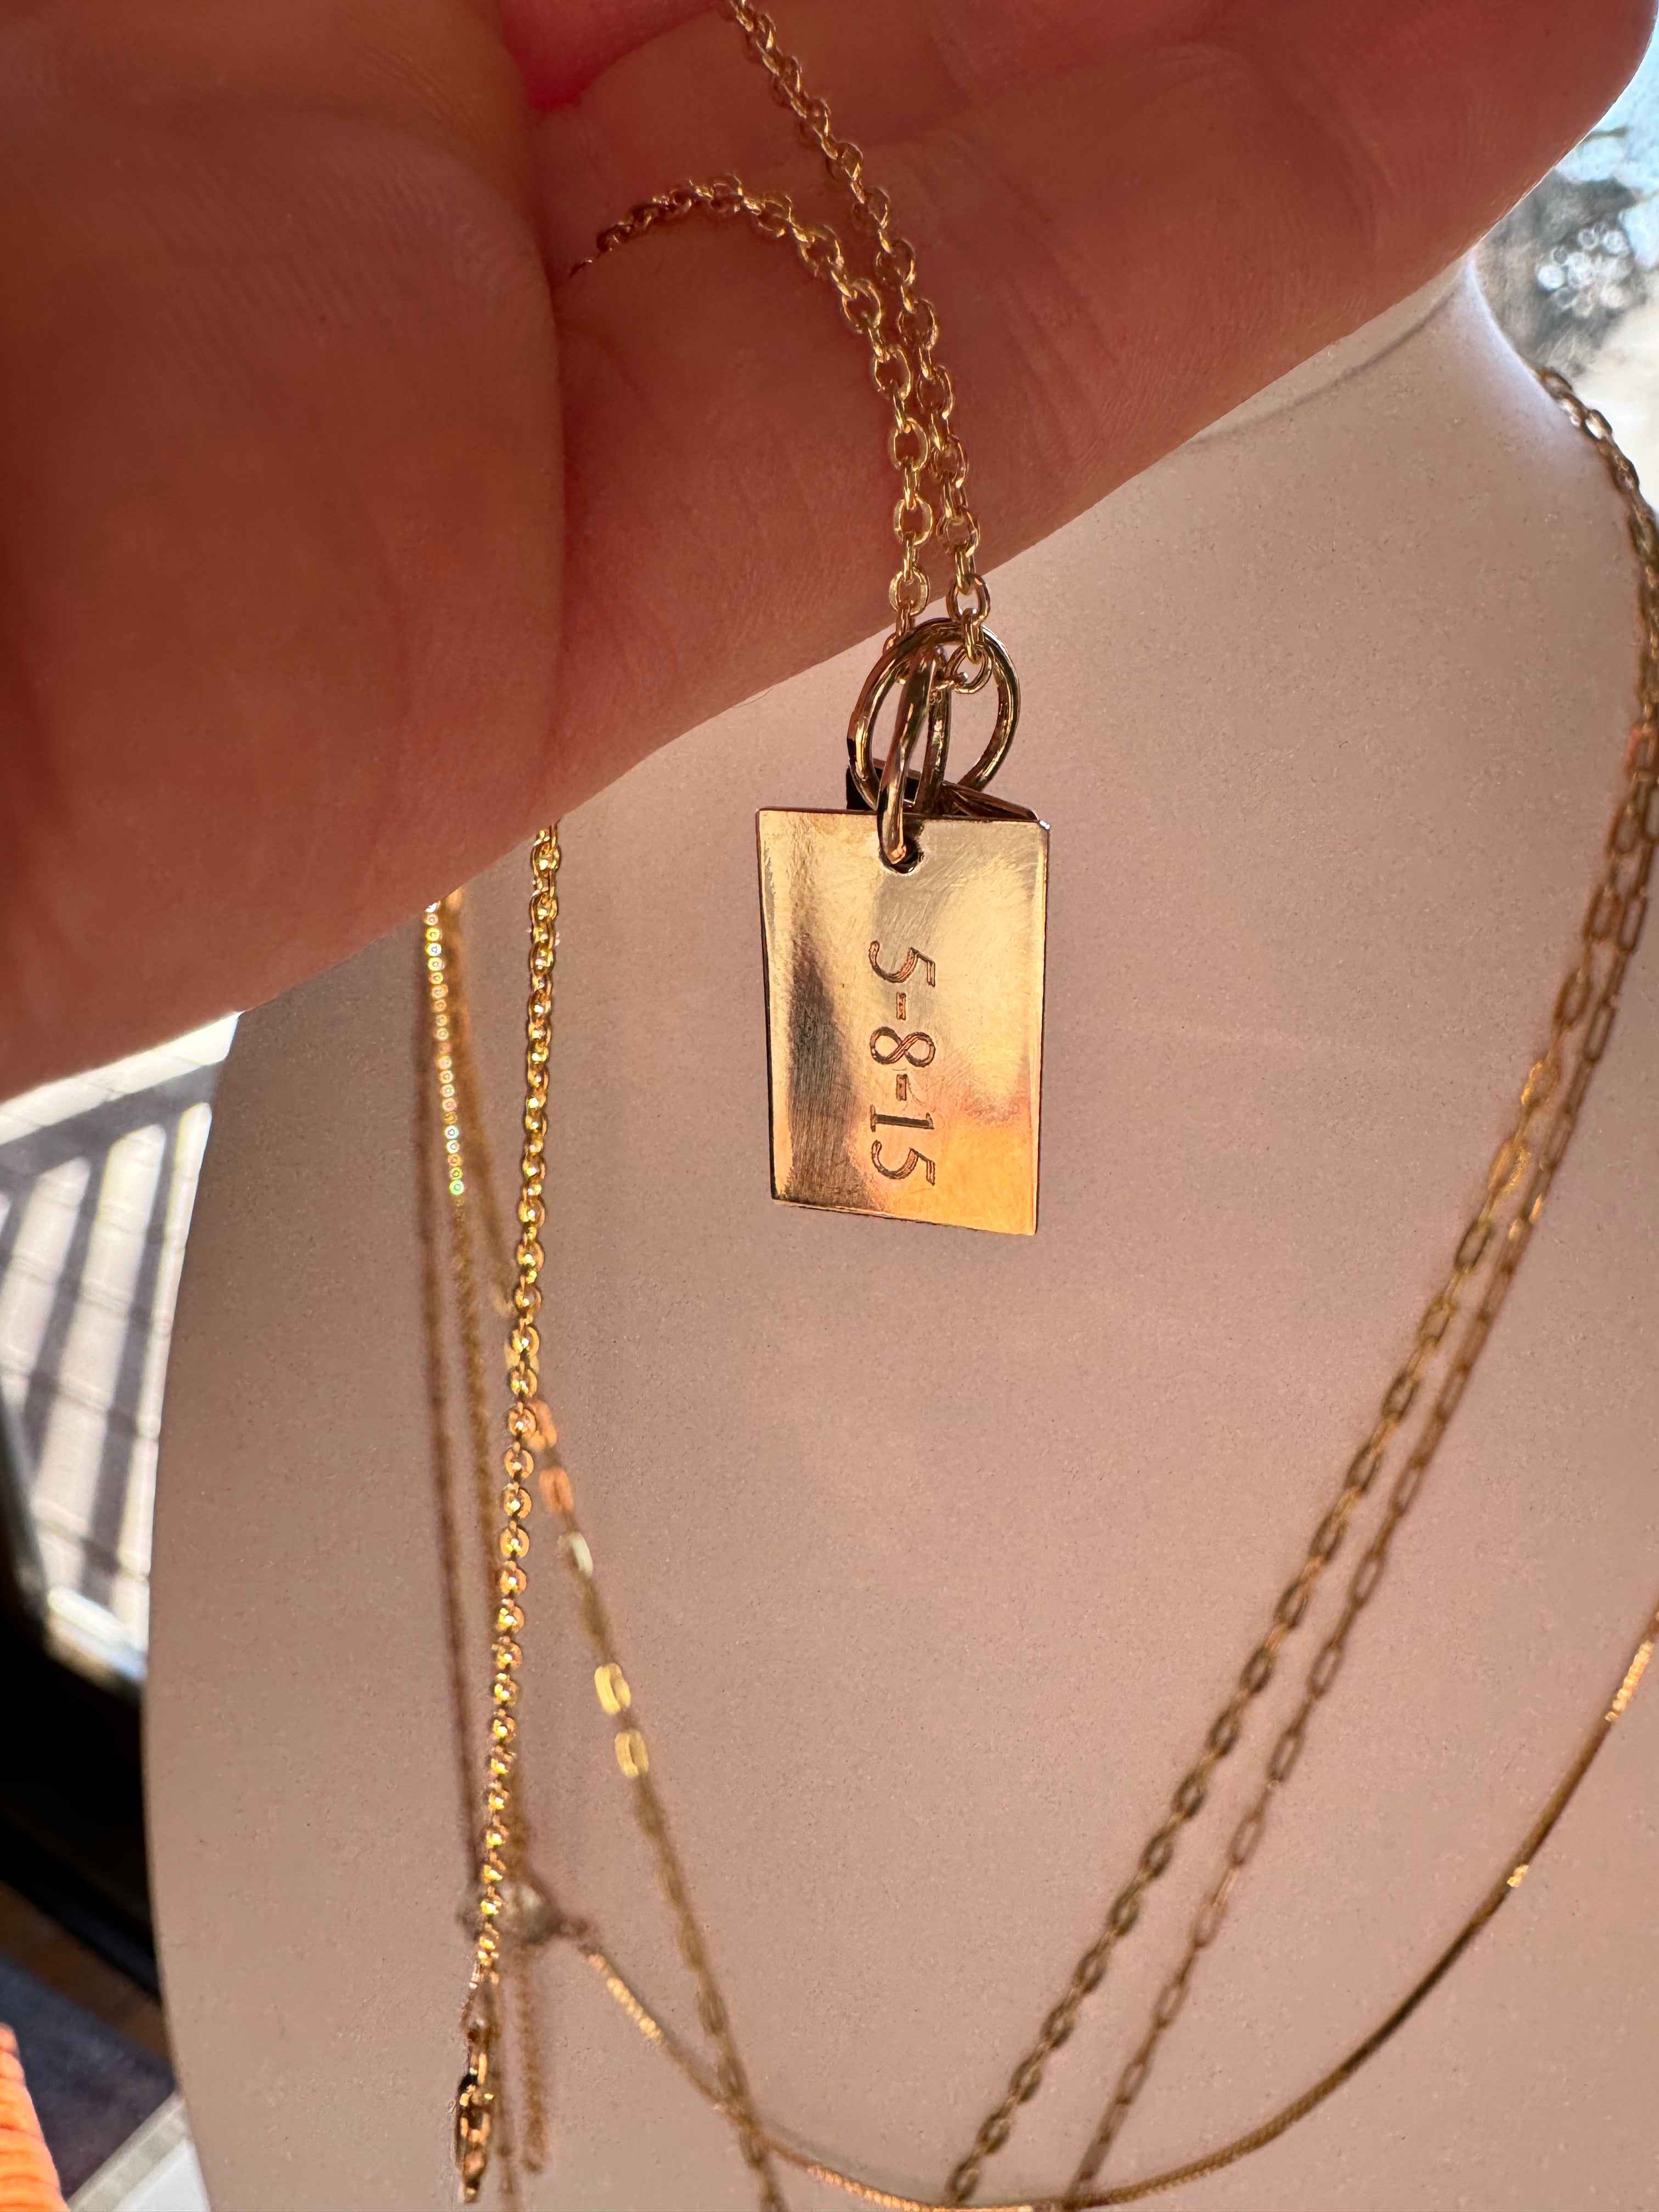 Engravable 14k Gold Tag Charm Necklace